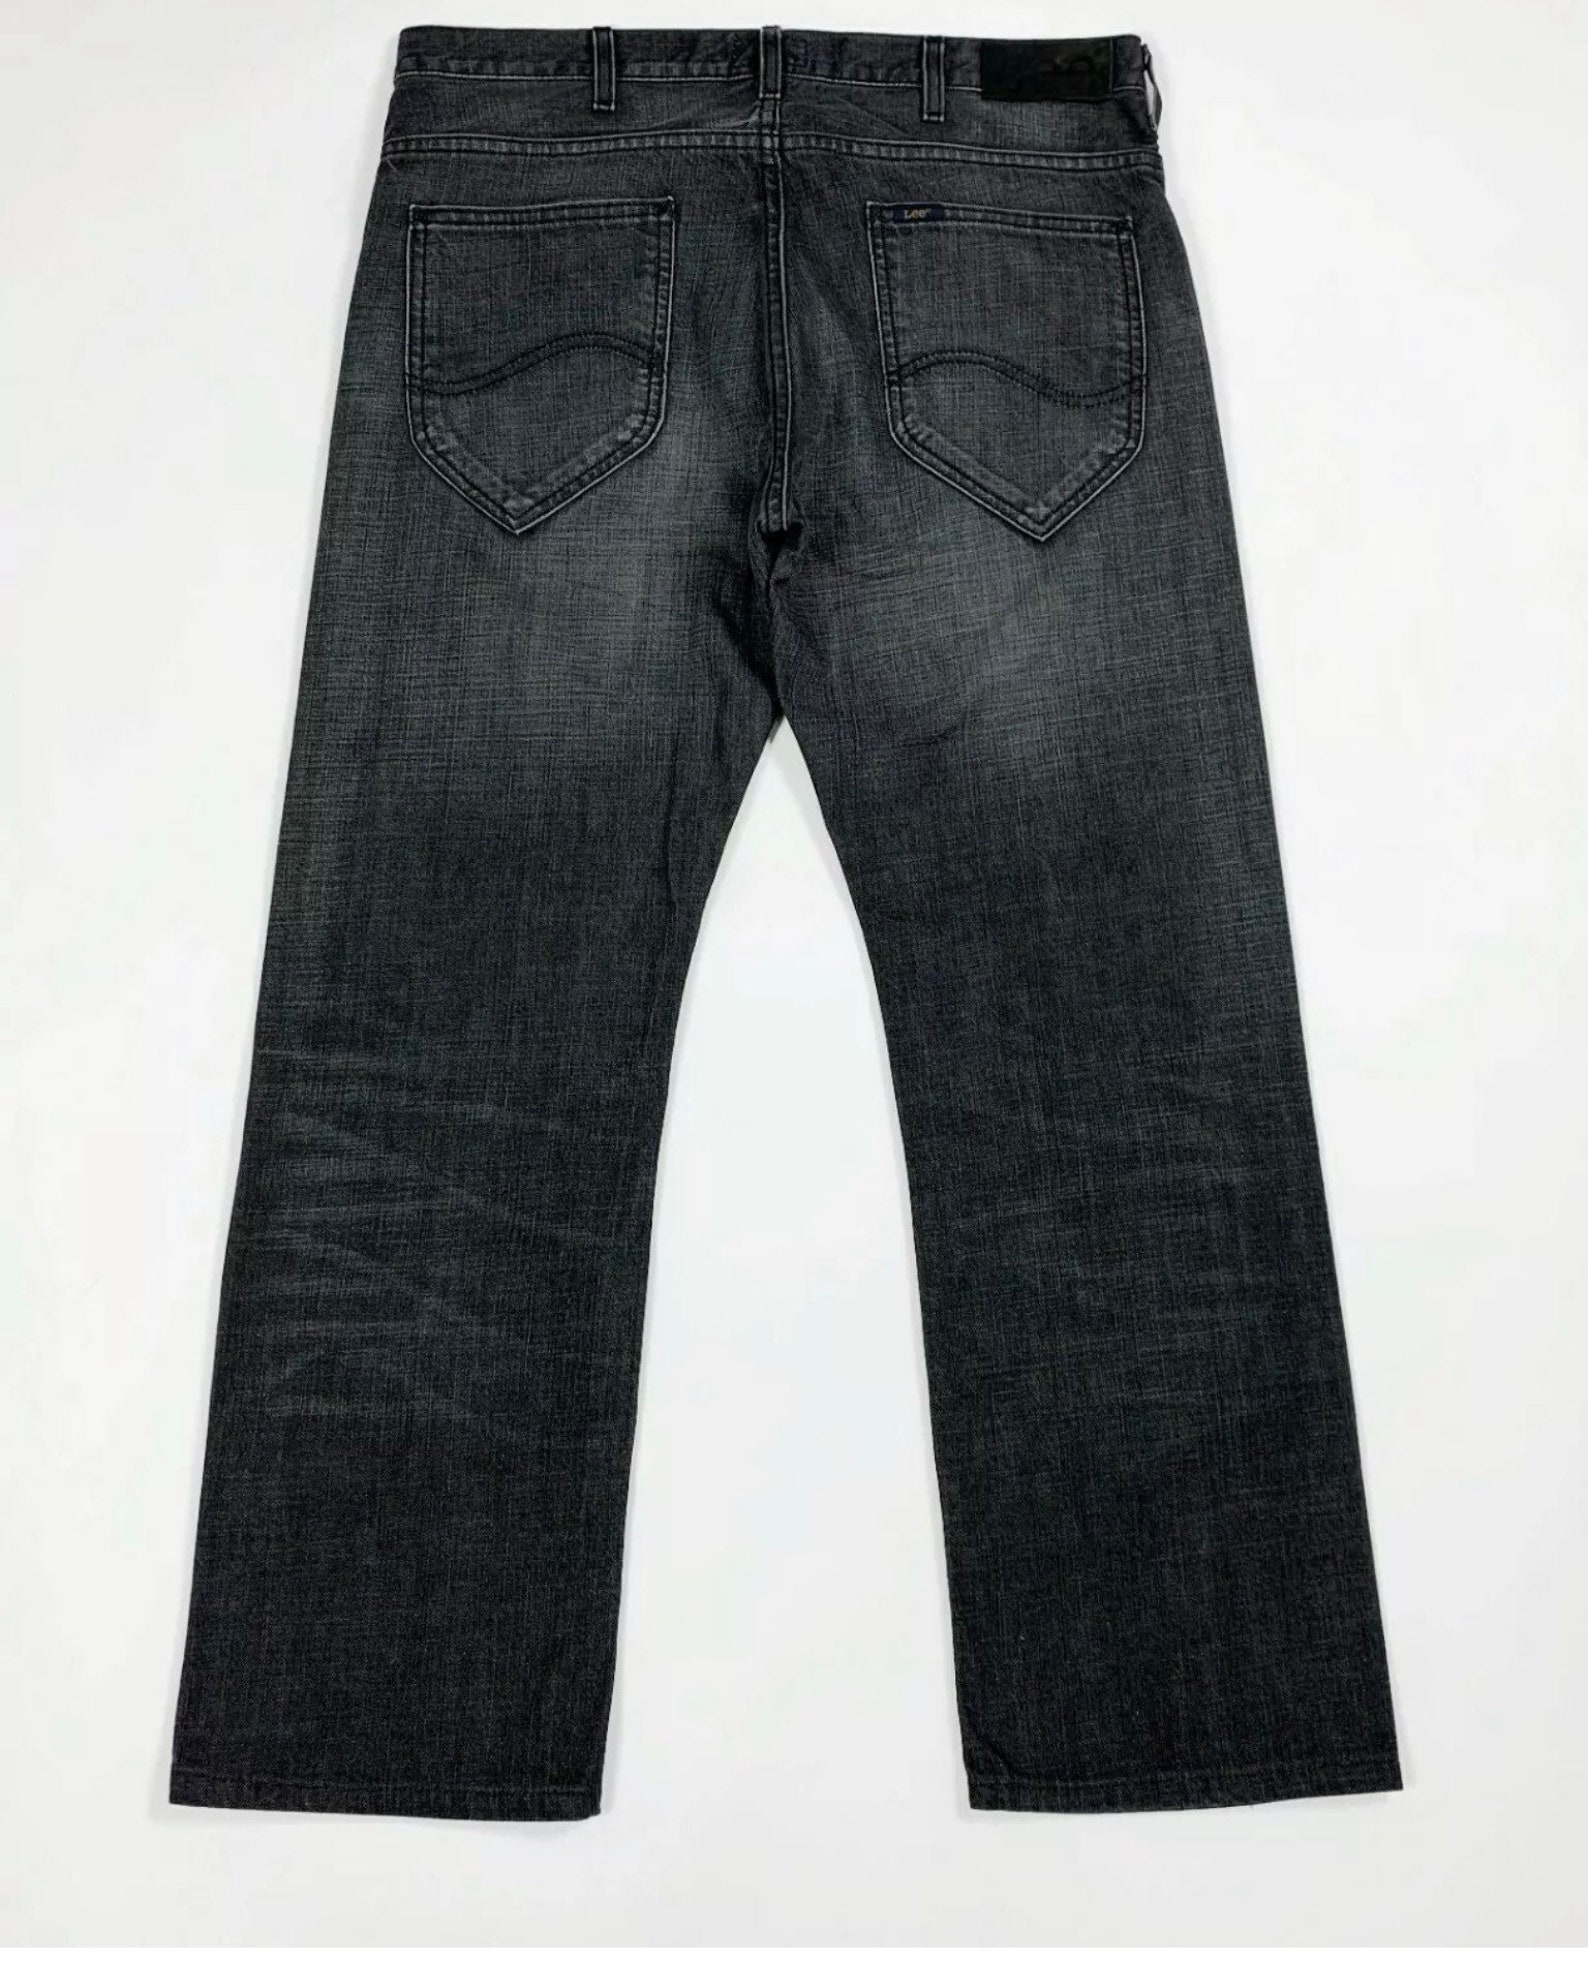 Lee clark jeans uomo usato W34 tg 48 denim gamba dritta grigio | Etsy